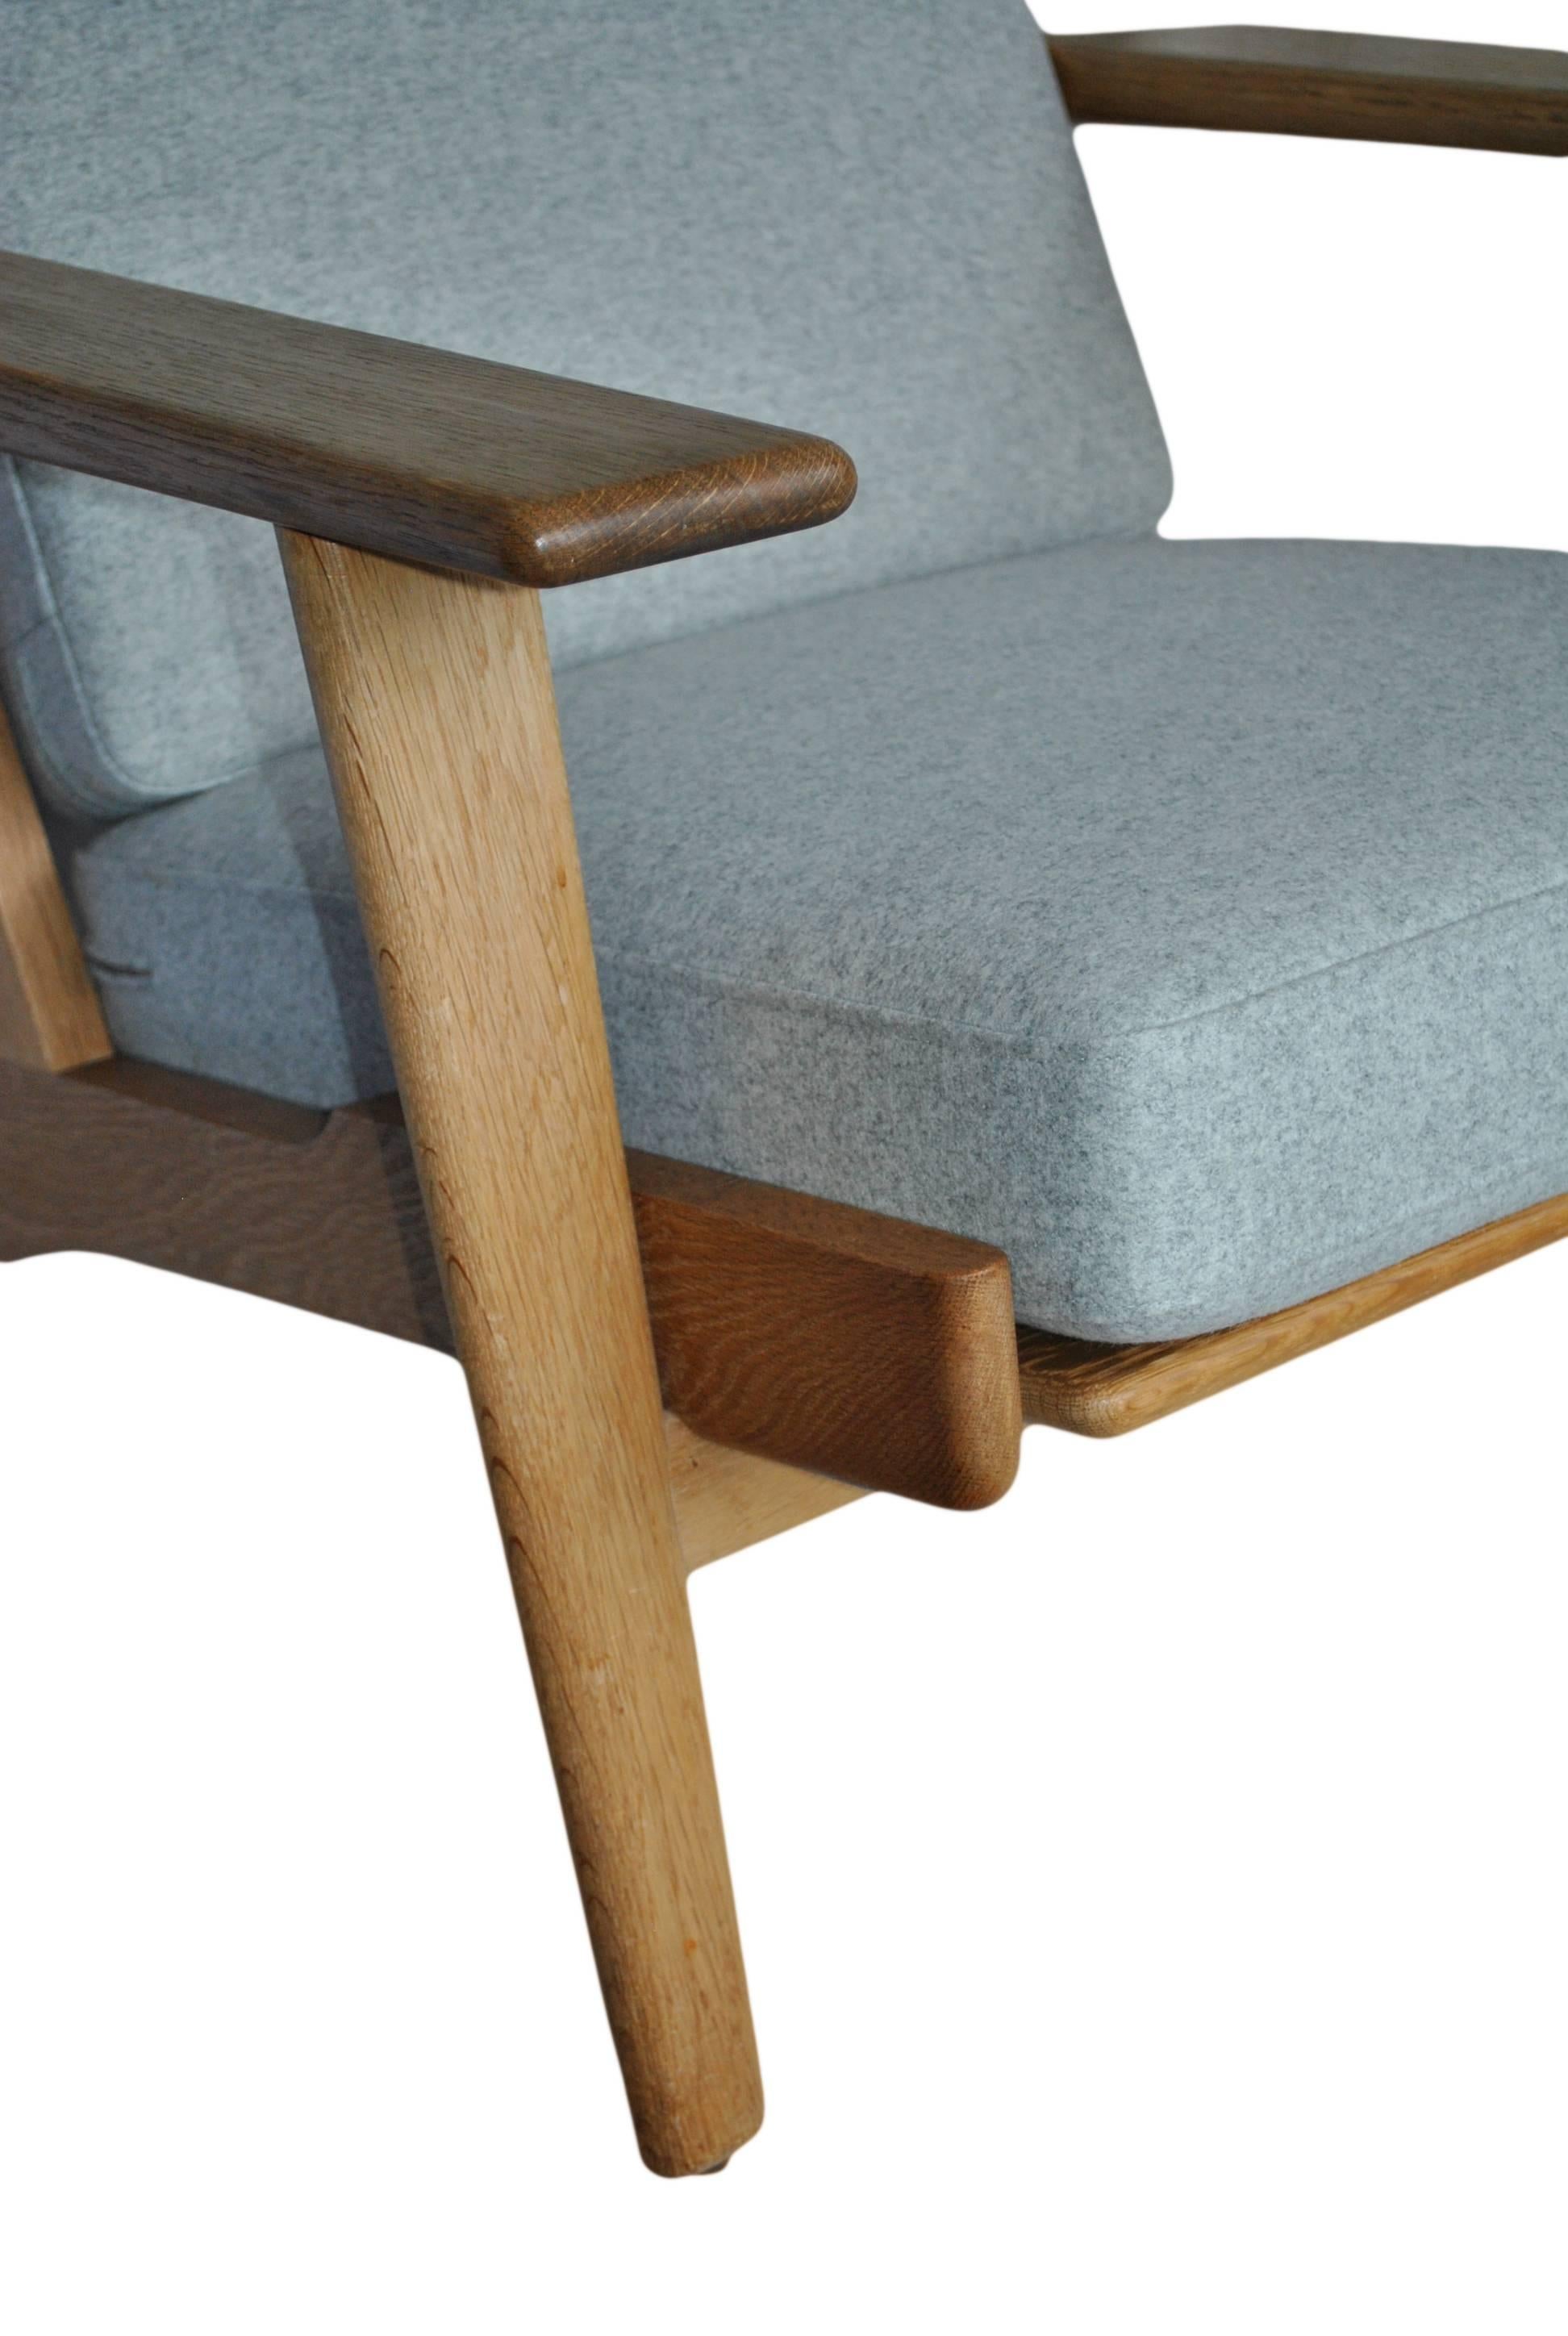 20th Century Hans Wegner GE290 Lounge Chair, 1950s Original. Fully refurbished.